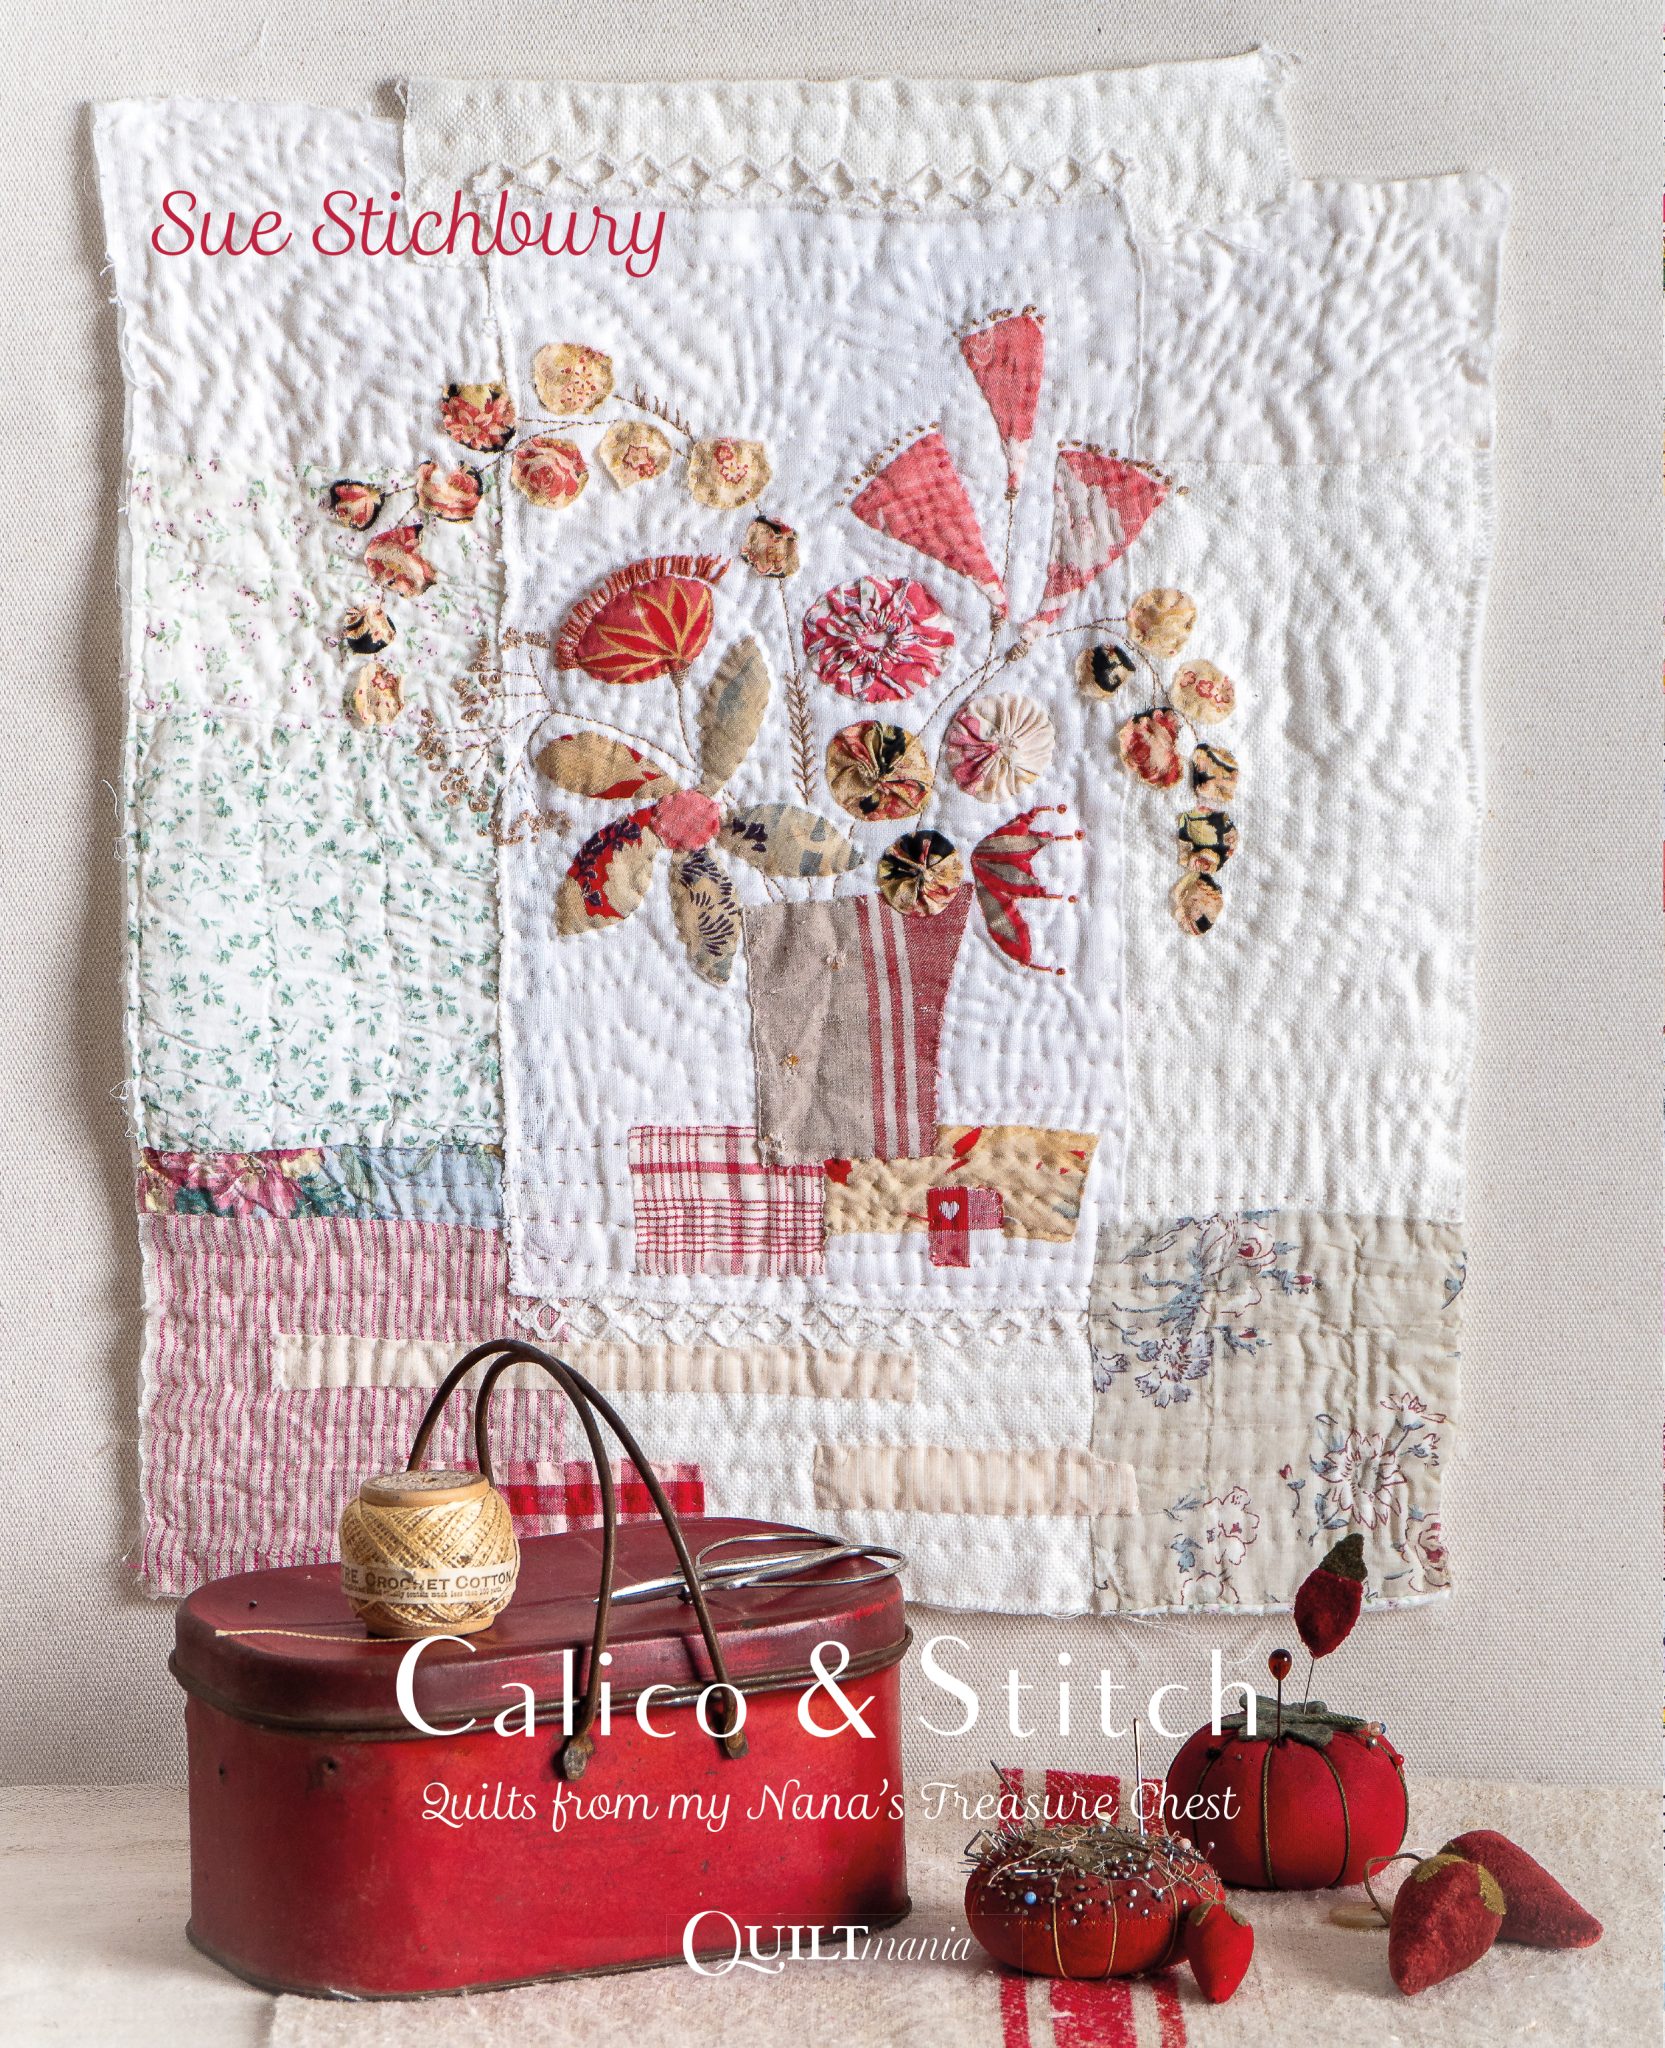 Calico & Stitch - Sue Stichbury - Quiltmania Editions